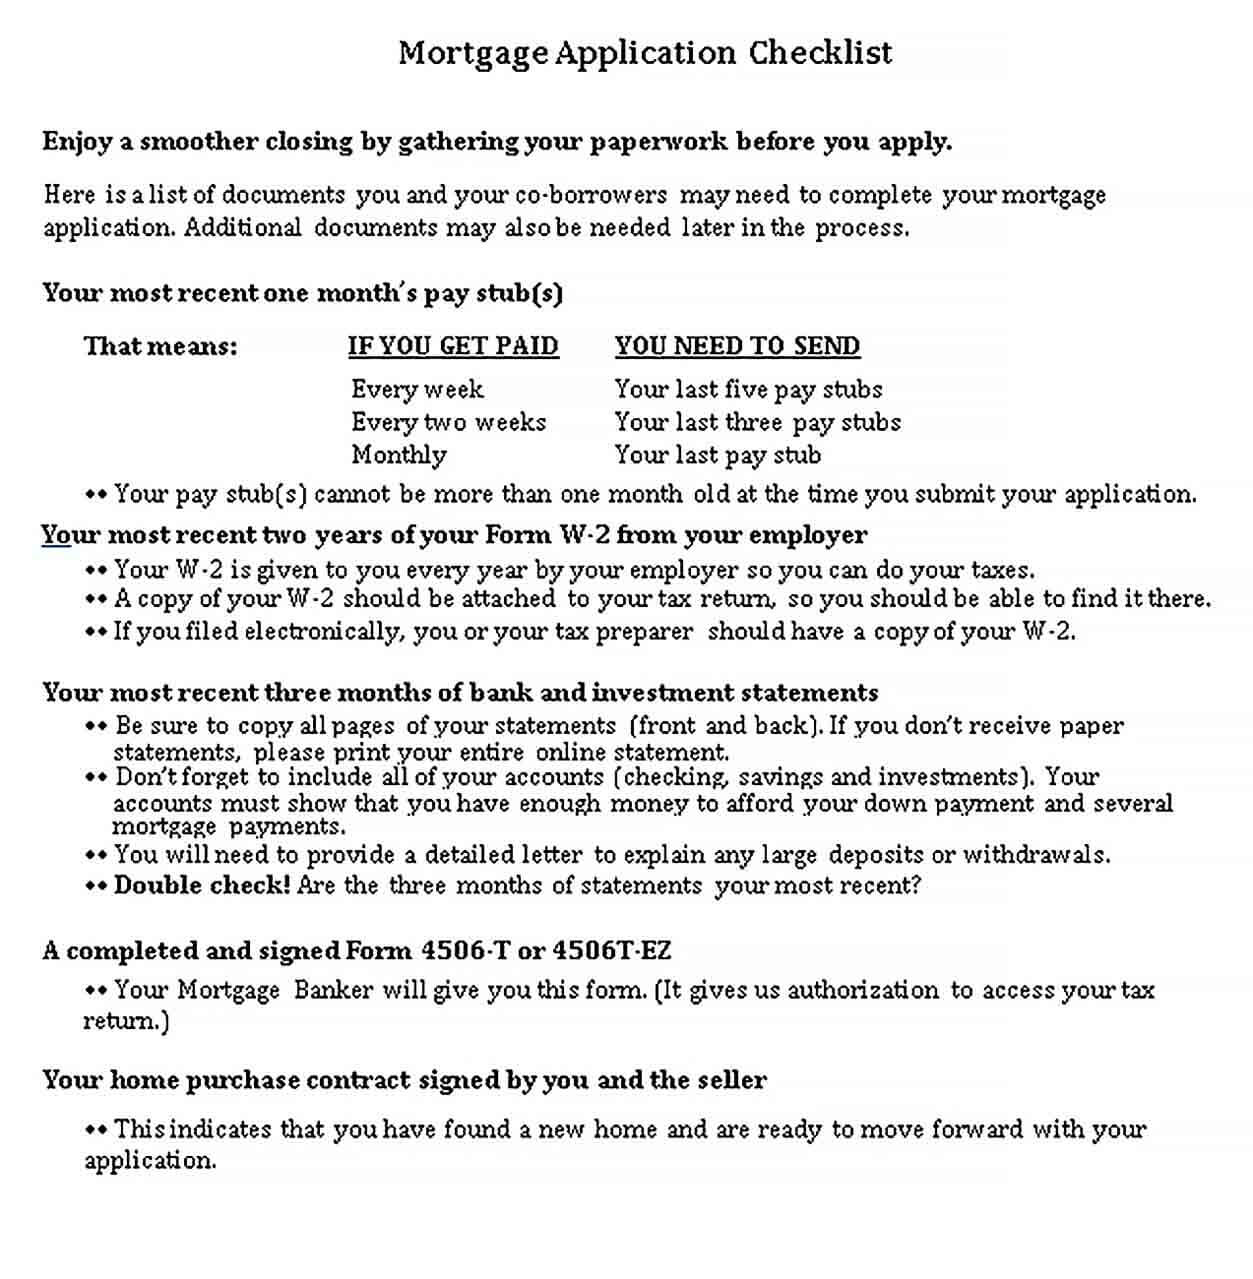 Mortgage Application Checklist